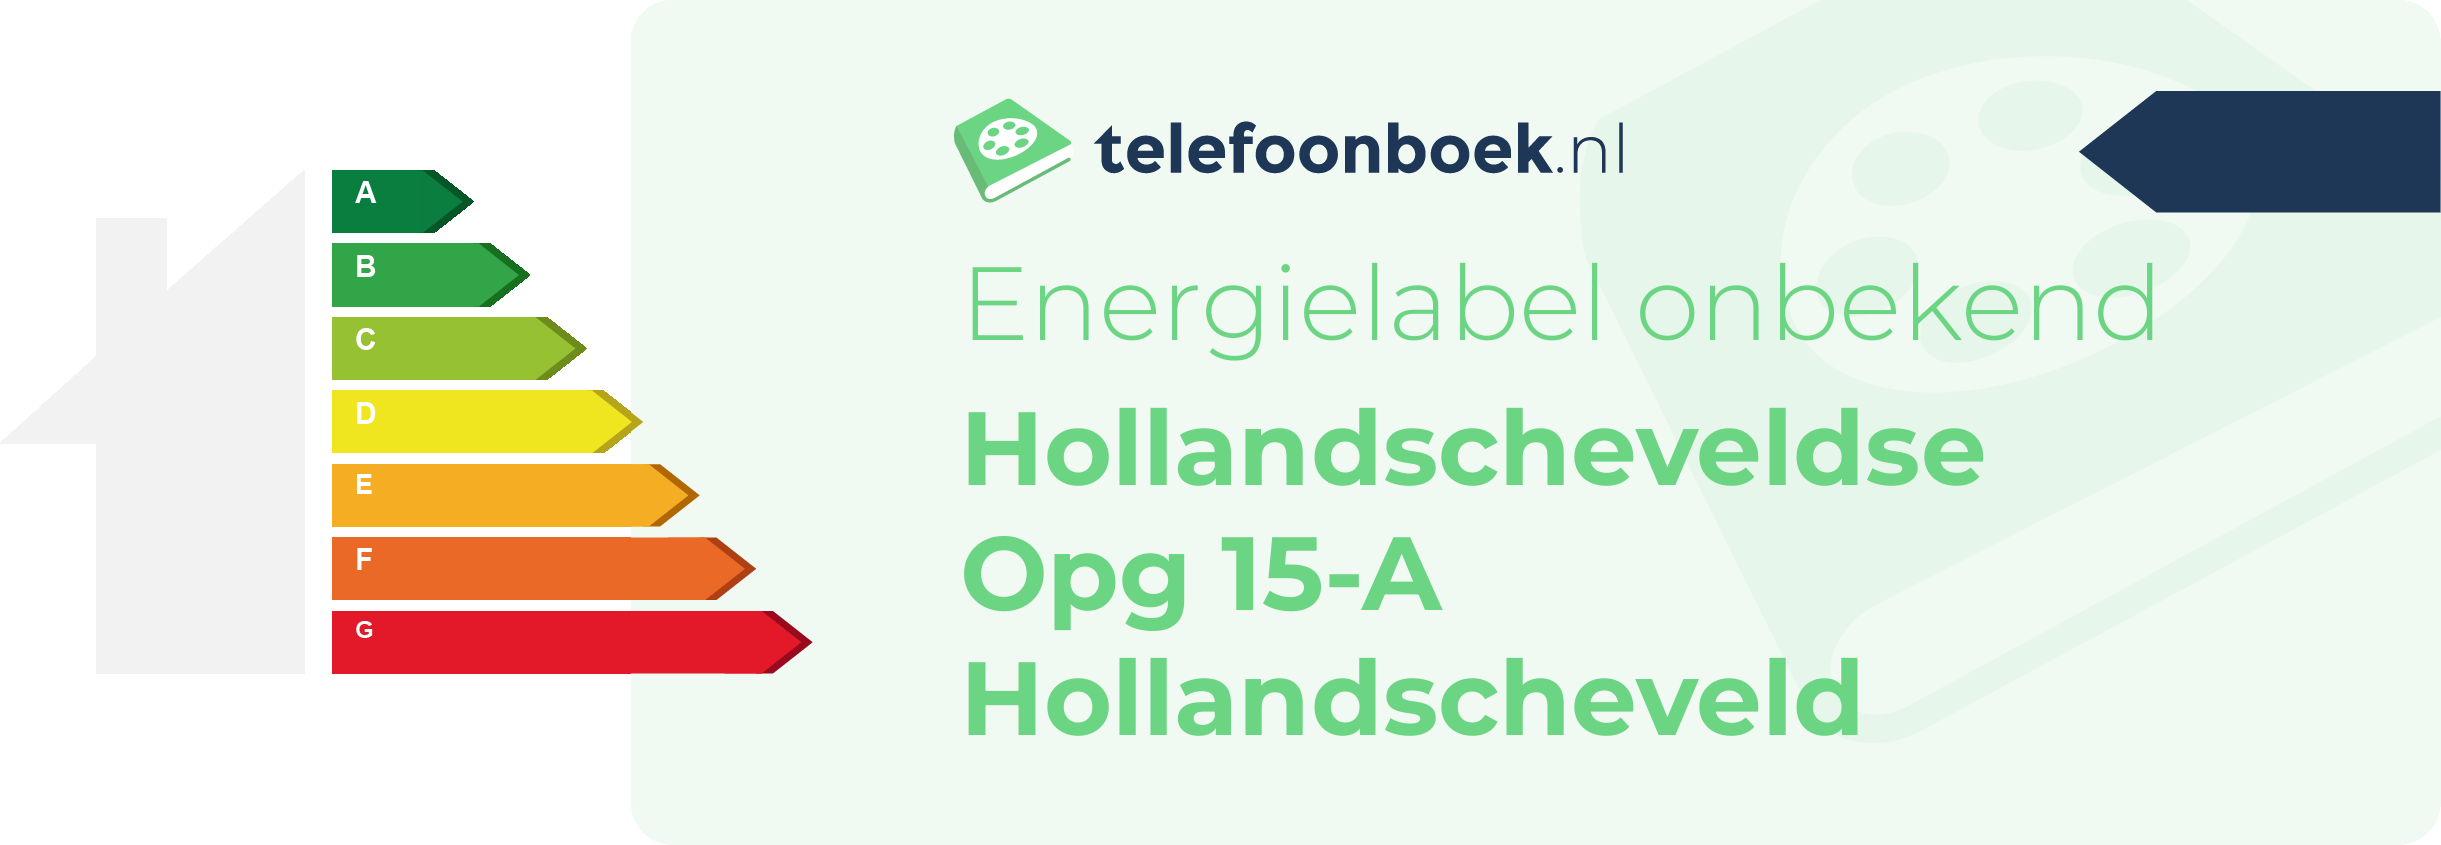 Energielabel Hollandscheveldse Opg 15-A Hollandscheveld